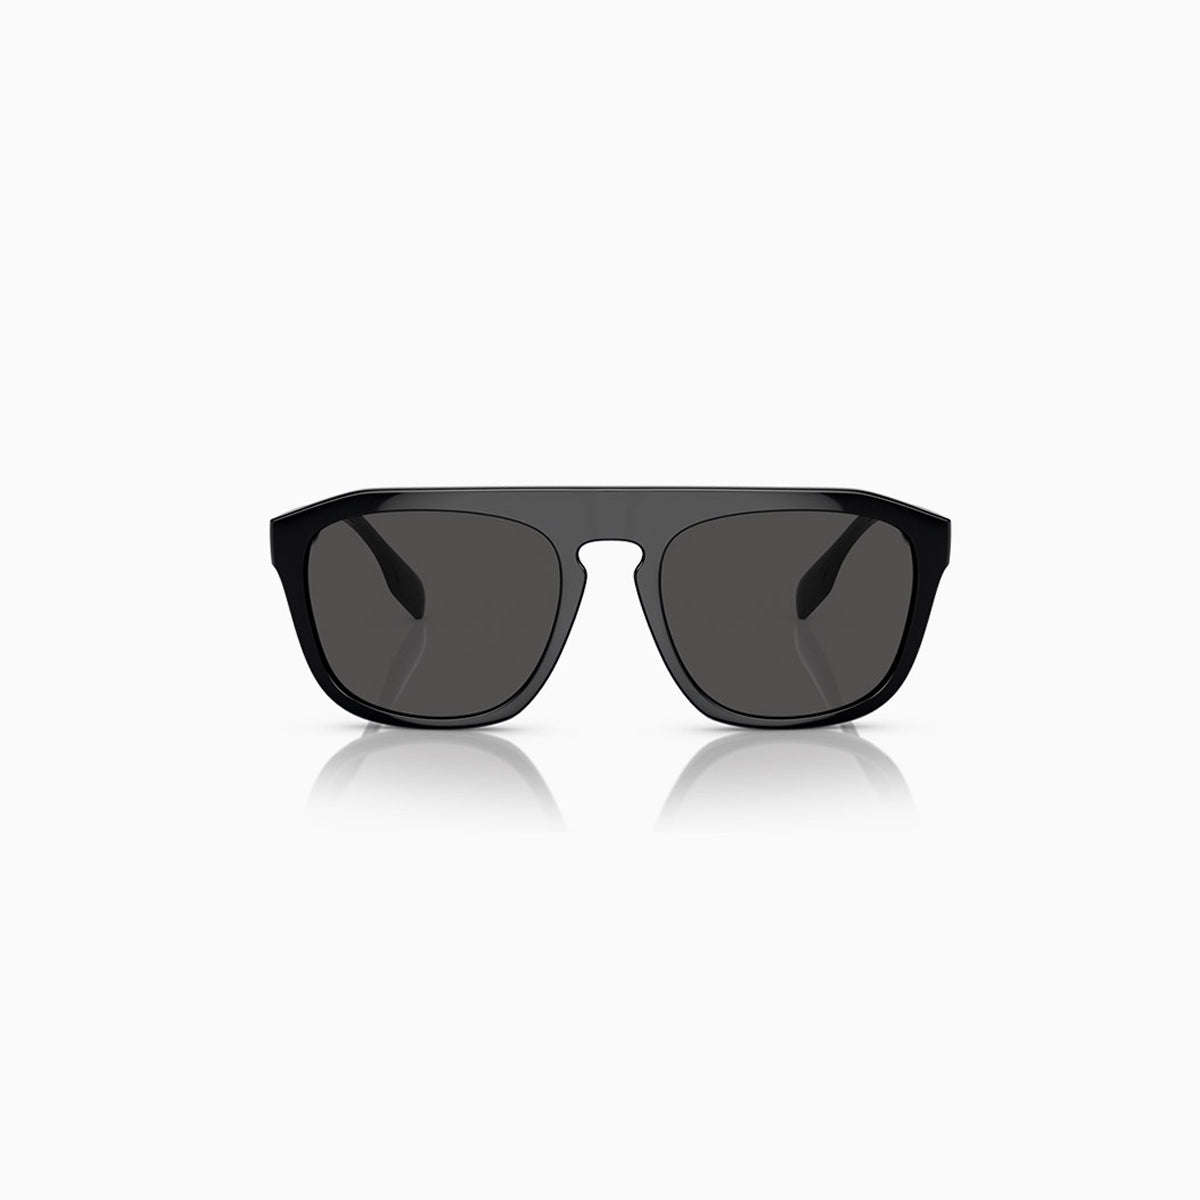 mens-burberry-wren-black-sunglasses-0be4396u-300187